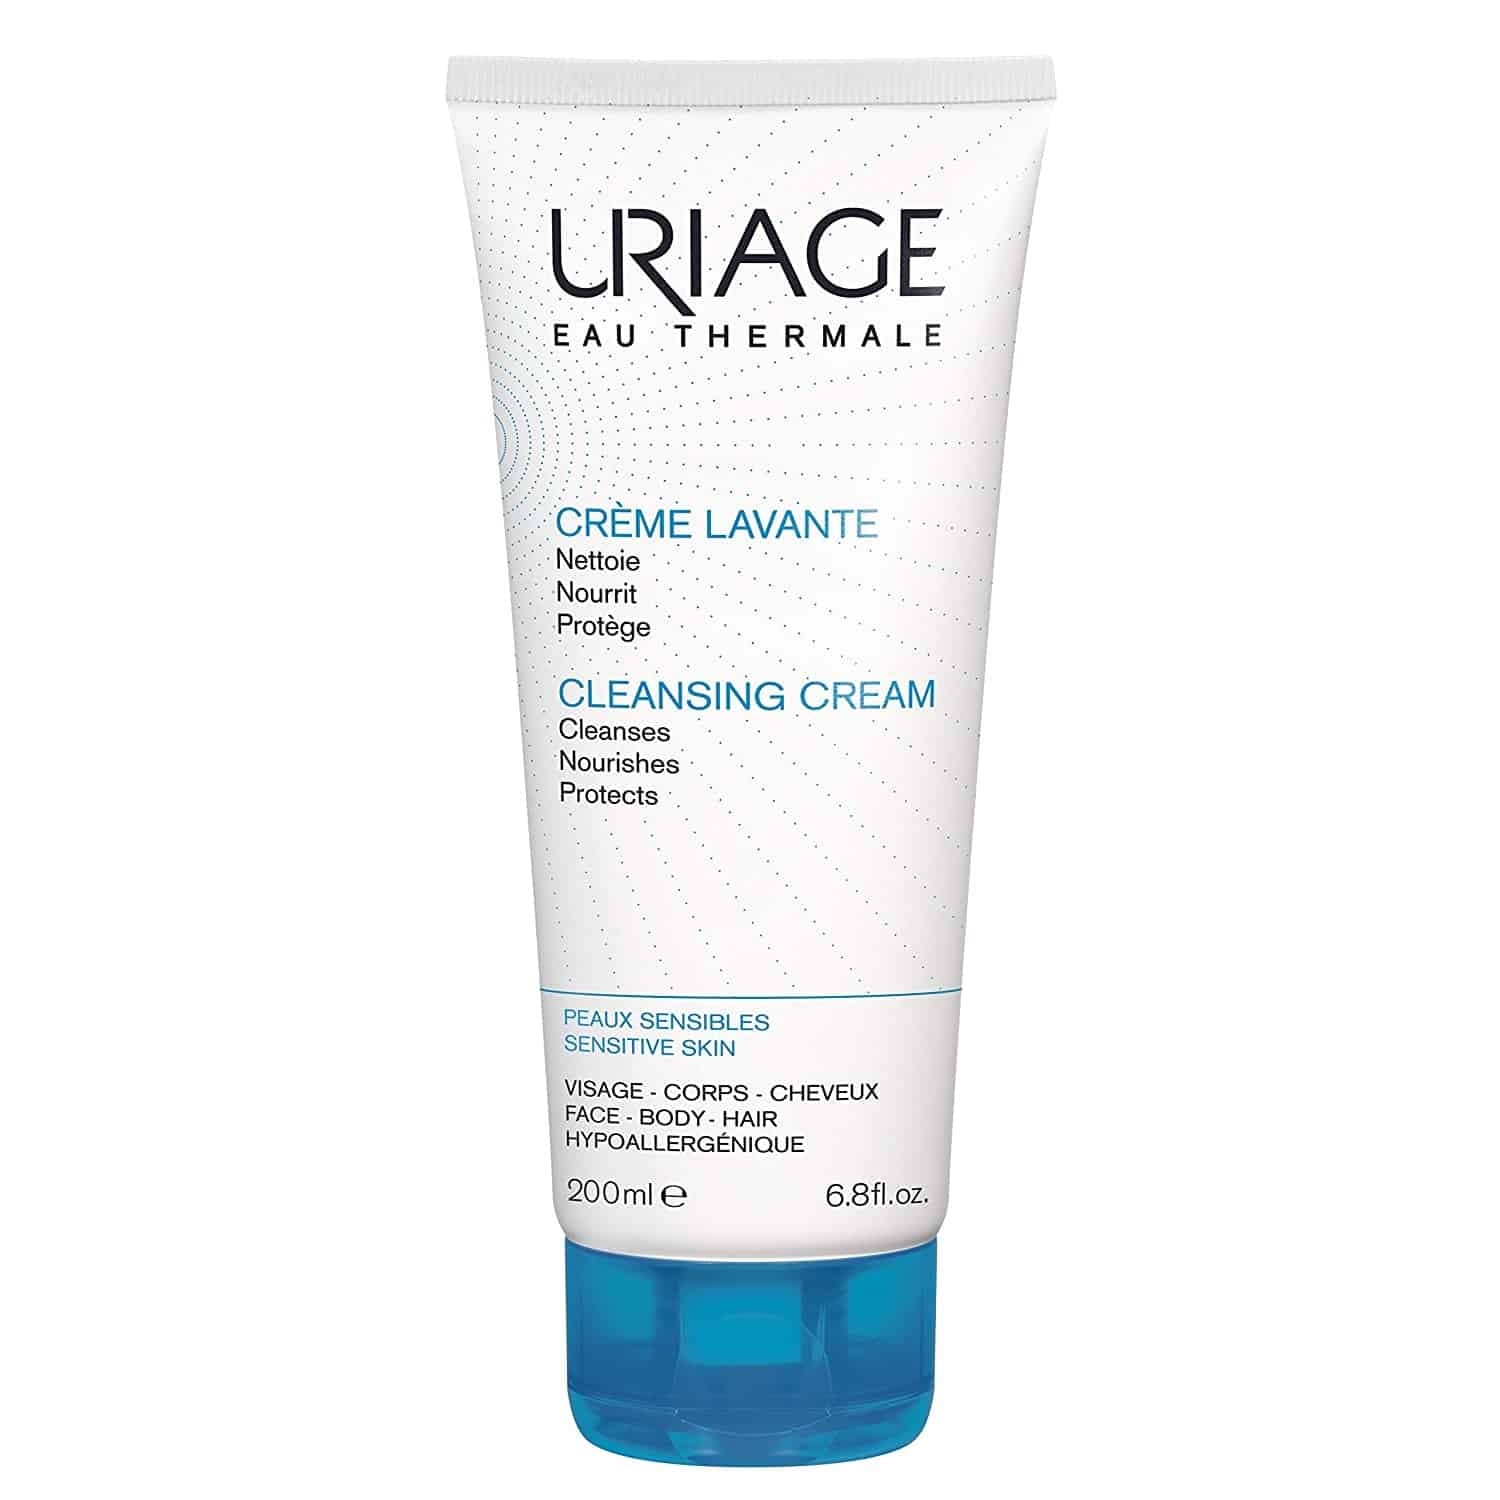 uriage cleansing cream reviews sanwarna.pk